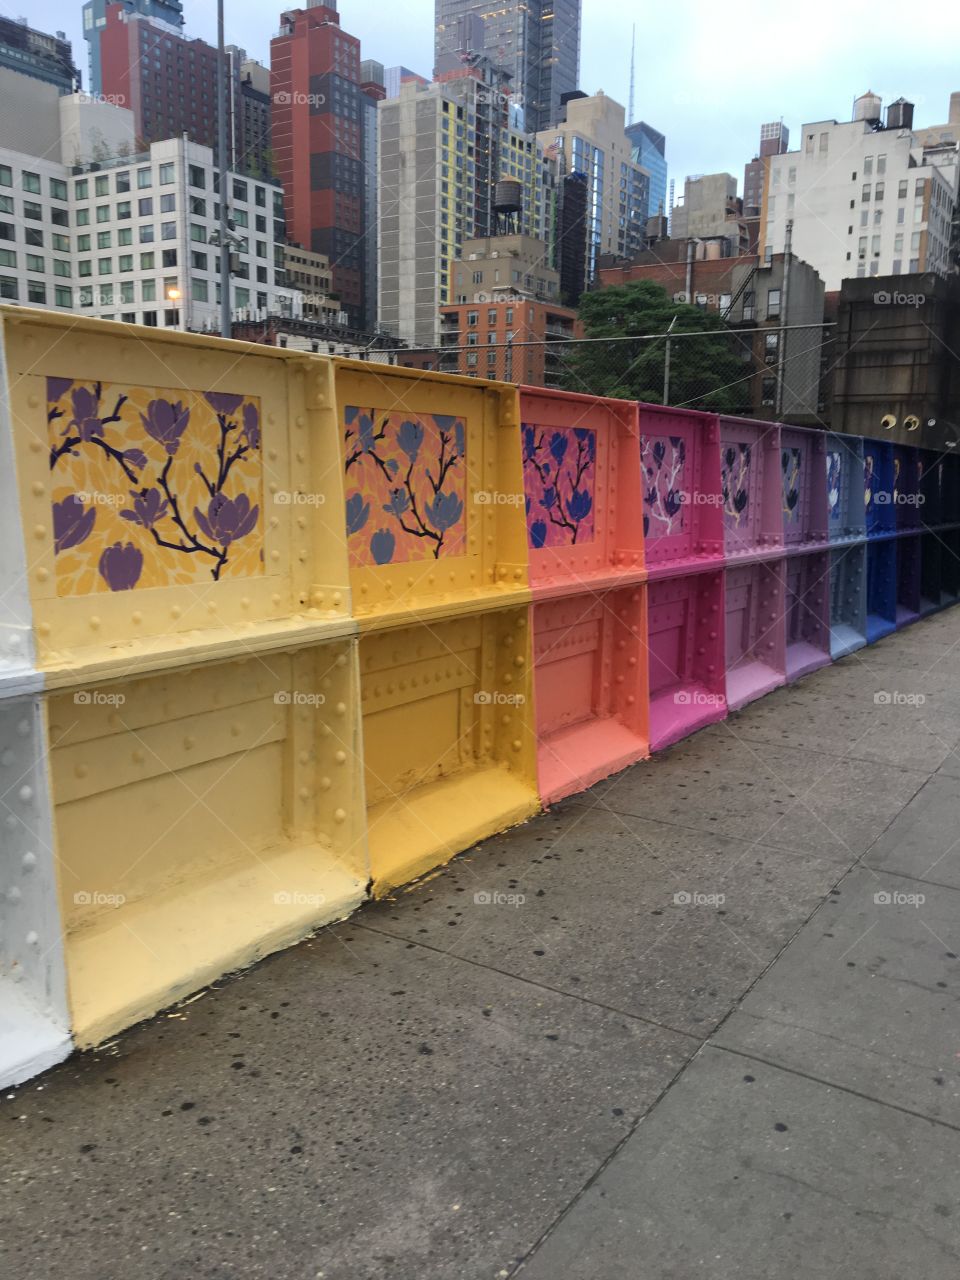 NYC street art wall in monochromatic color scheme 